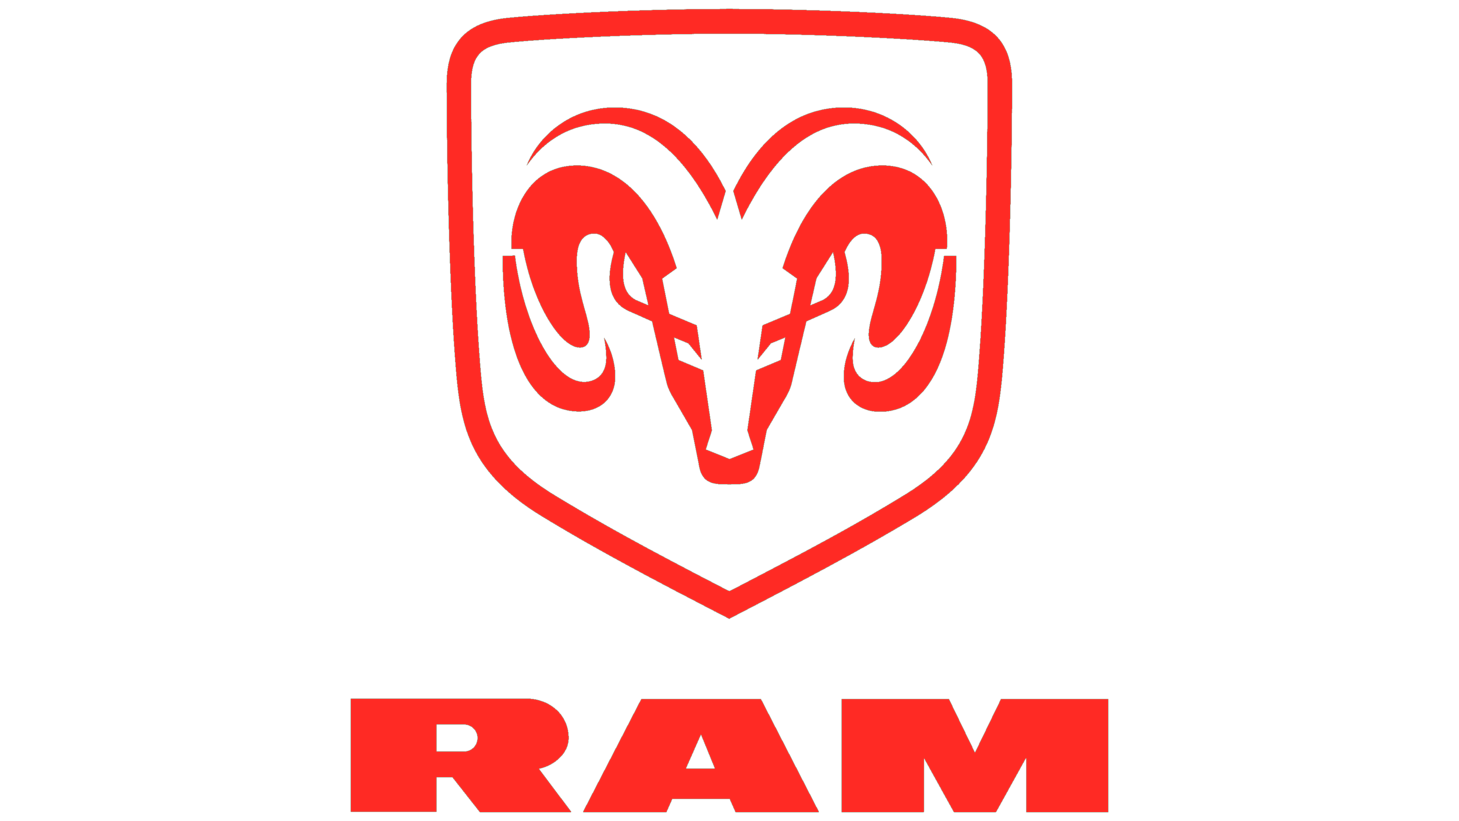 Dodge ram sign 1993